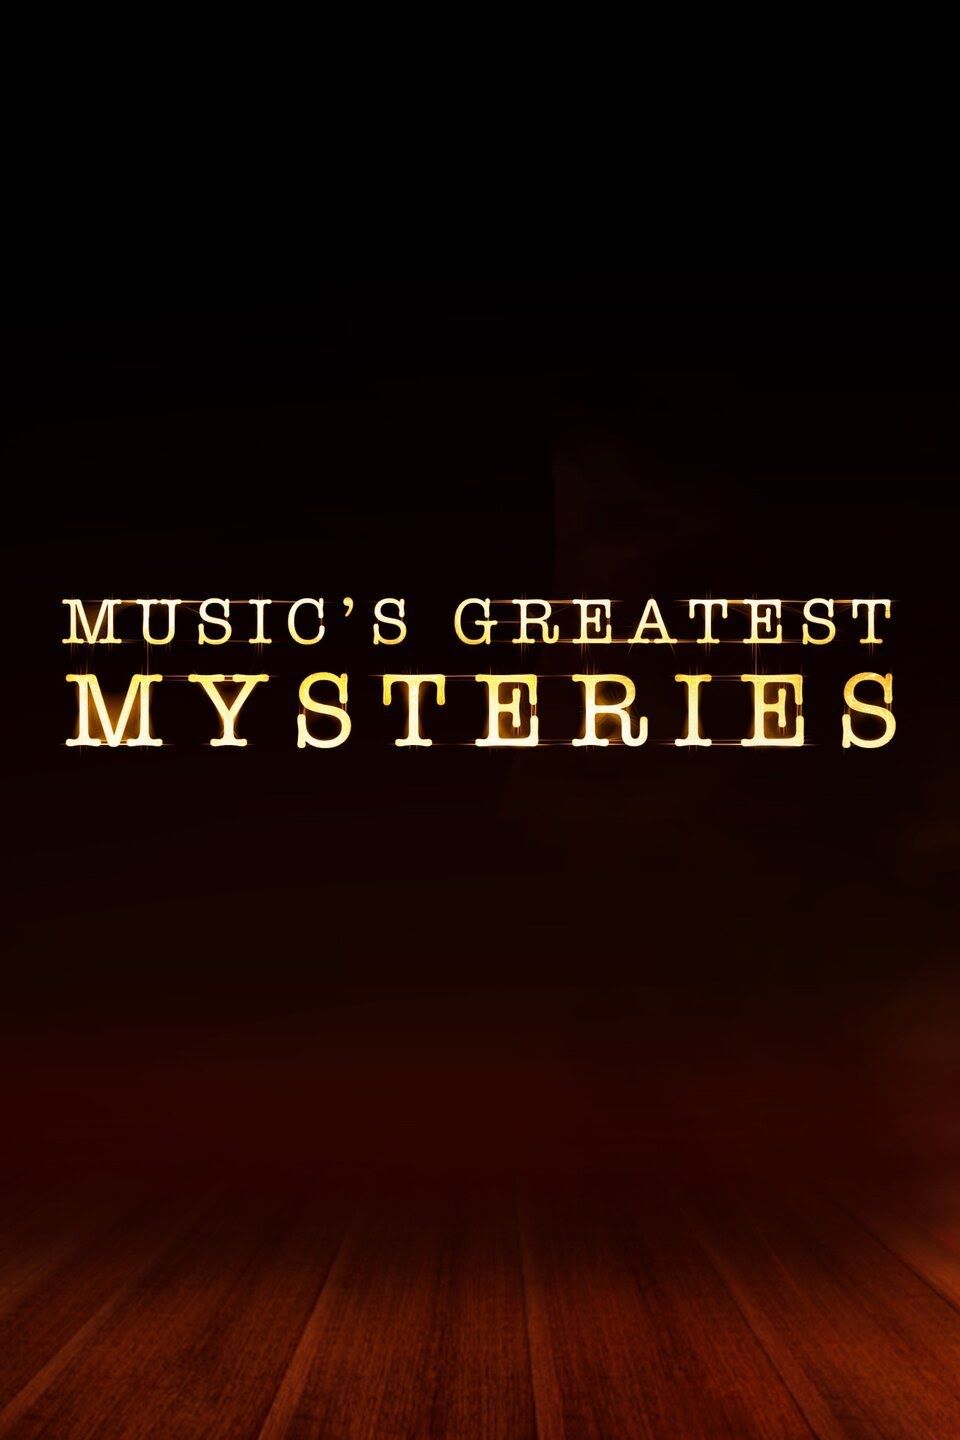 The Greatest Mysteries. Субтитры Music. Great Mysteries of the past компания.